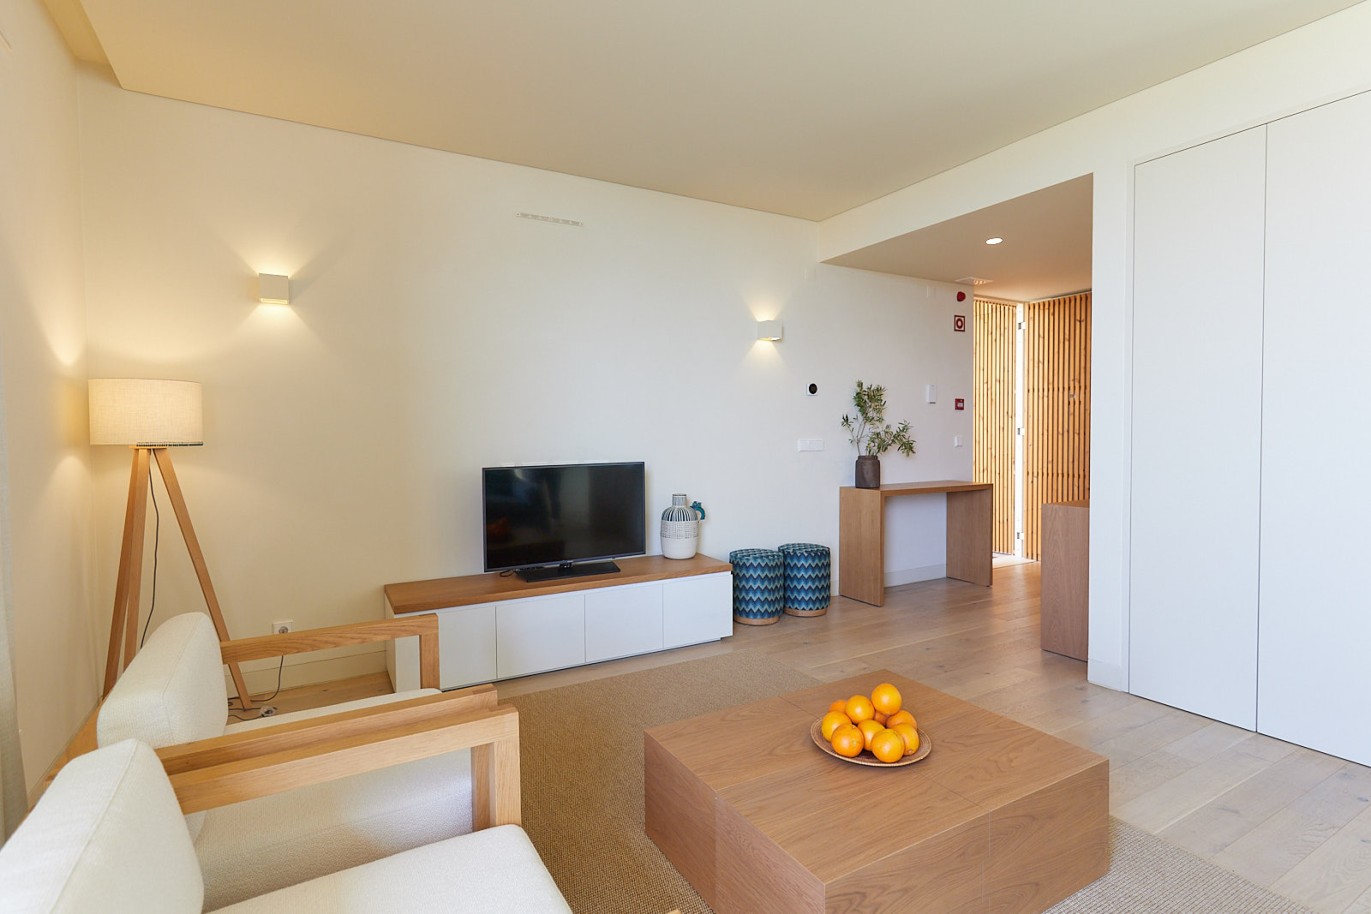 2 bedroom apartment in resort, for sale in Porches, Algarve_229119